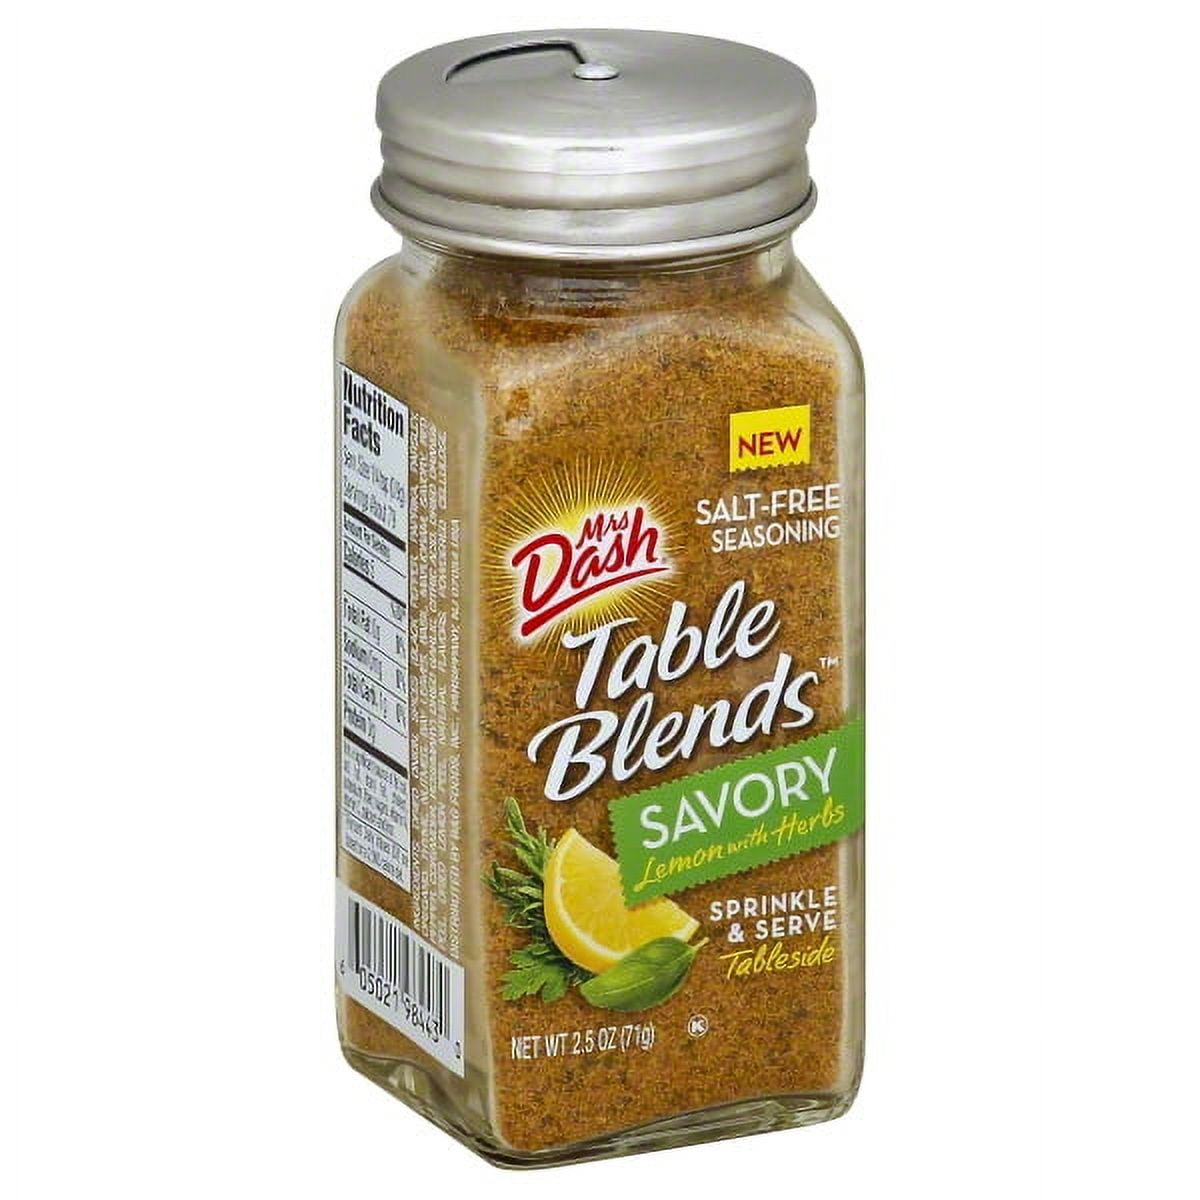 Mrs Dash Salt-Free Lemon Pepper Seasoning Blend, Shop